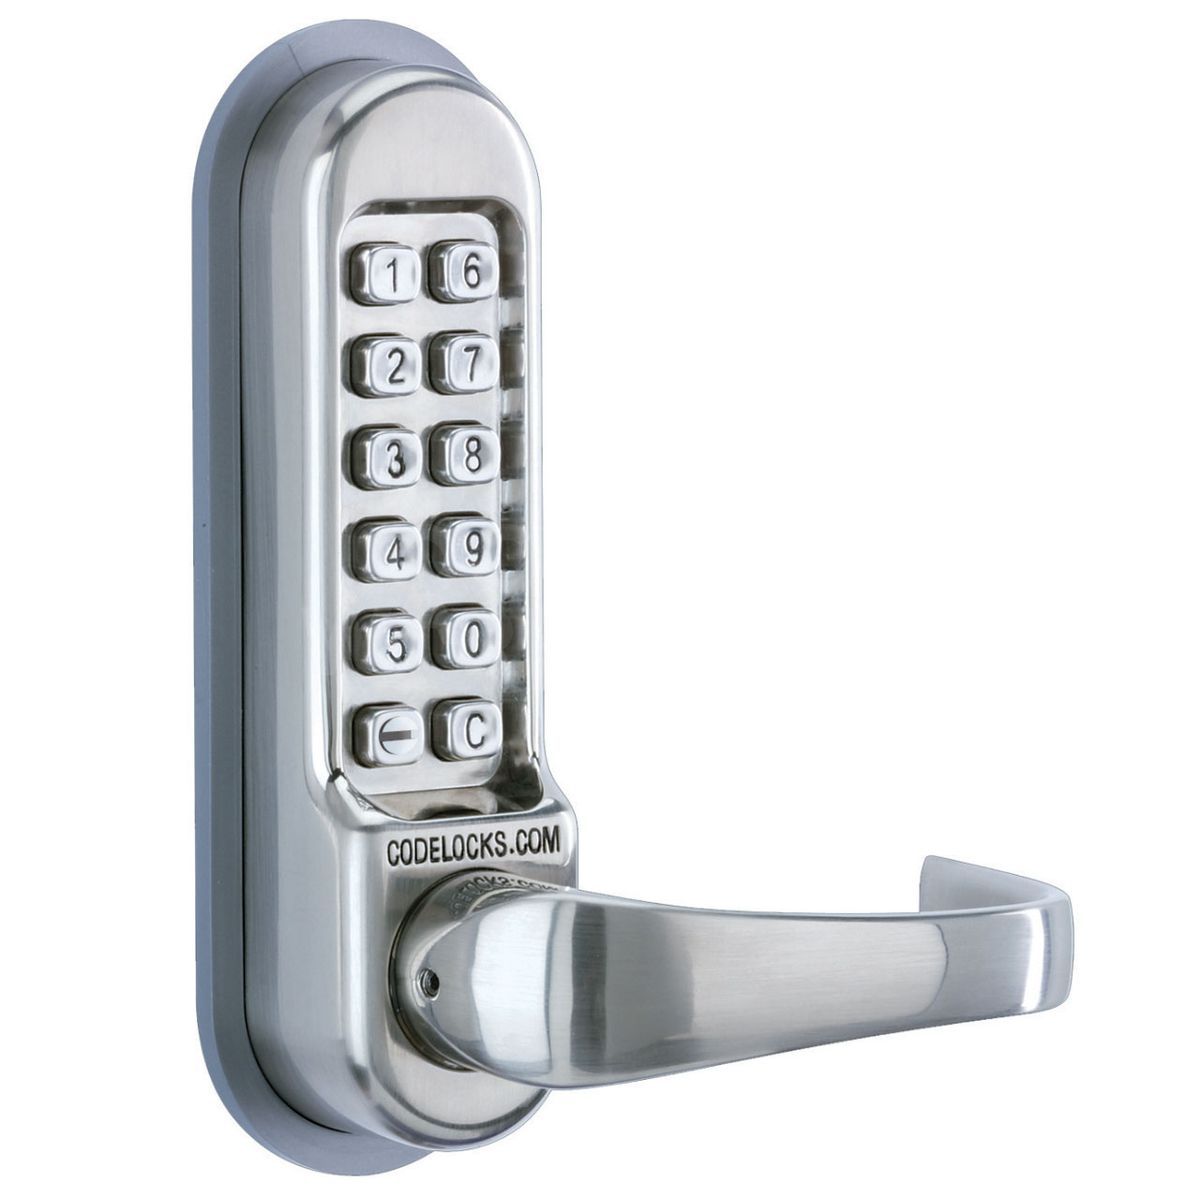 Codelock 500 Series Digital Locks